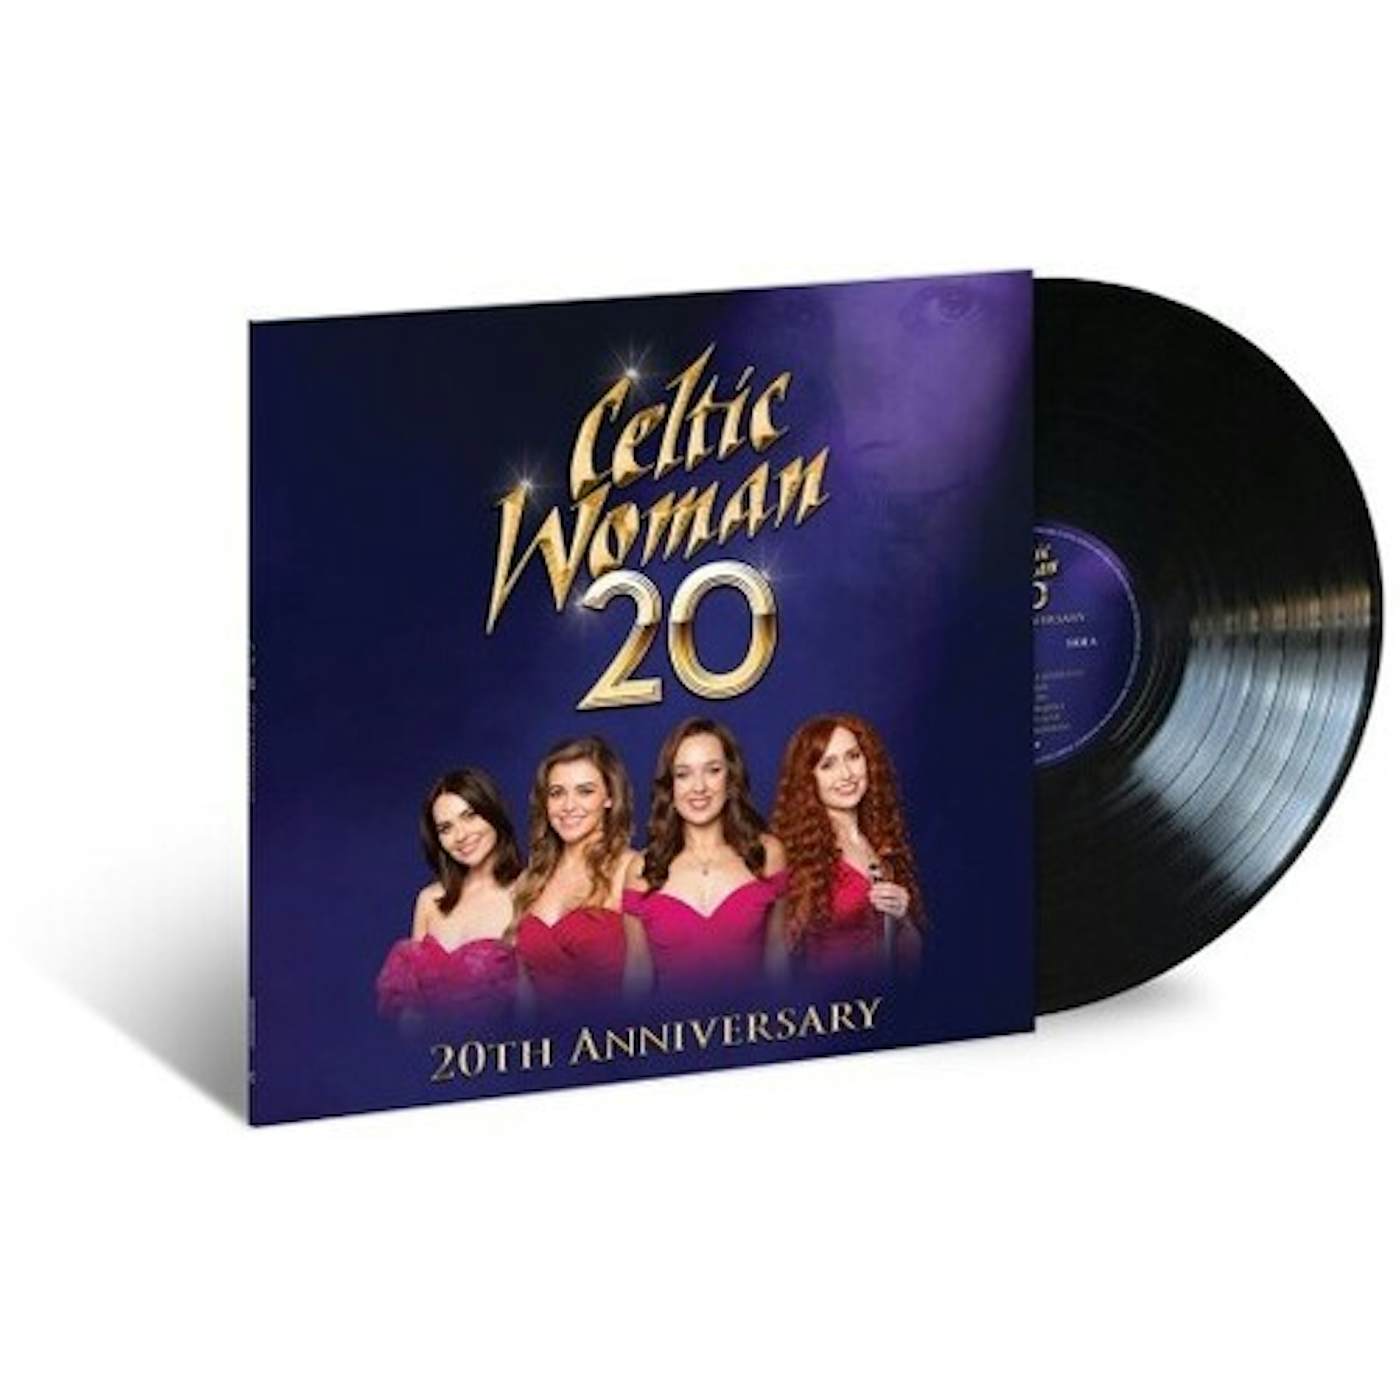 Celtic Woman 20 (20th Anniversary) (180 Gram) Vinyl Record